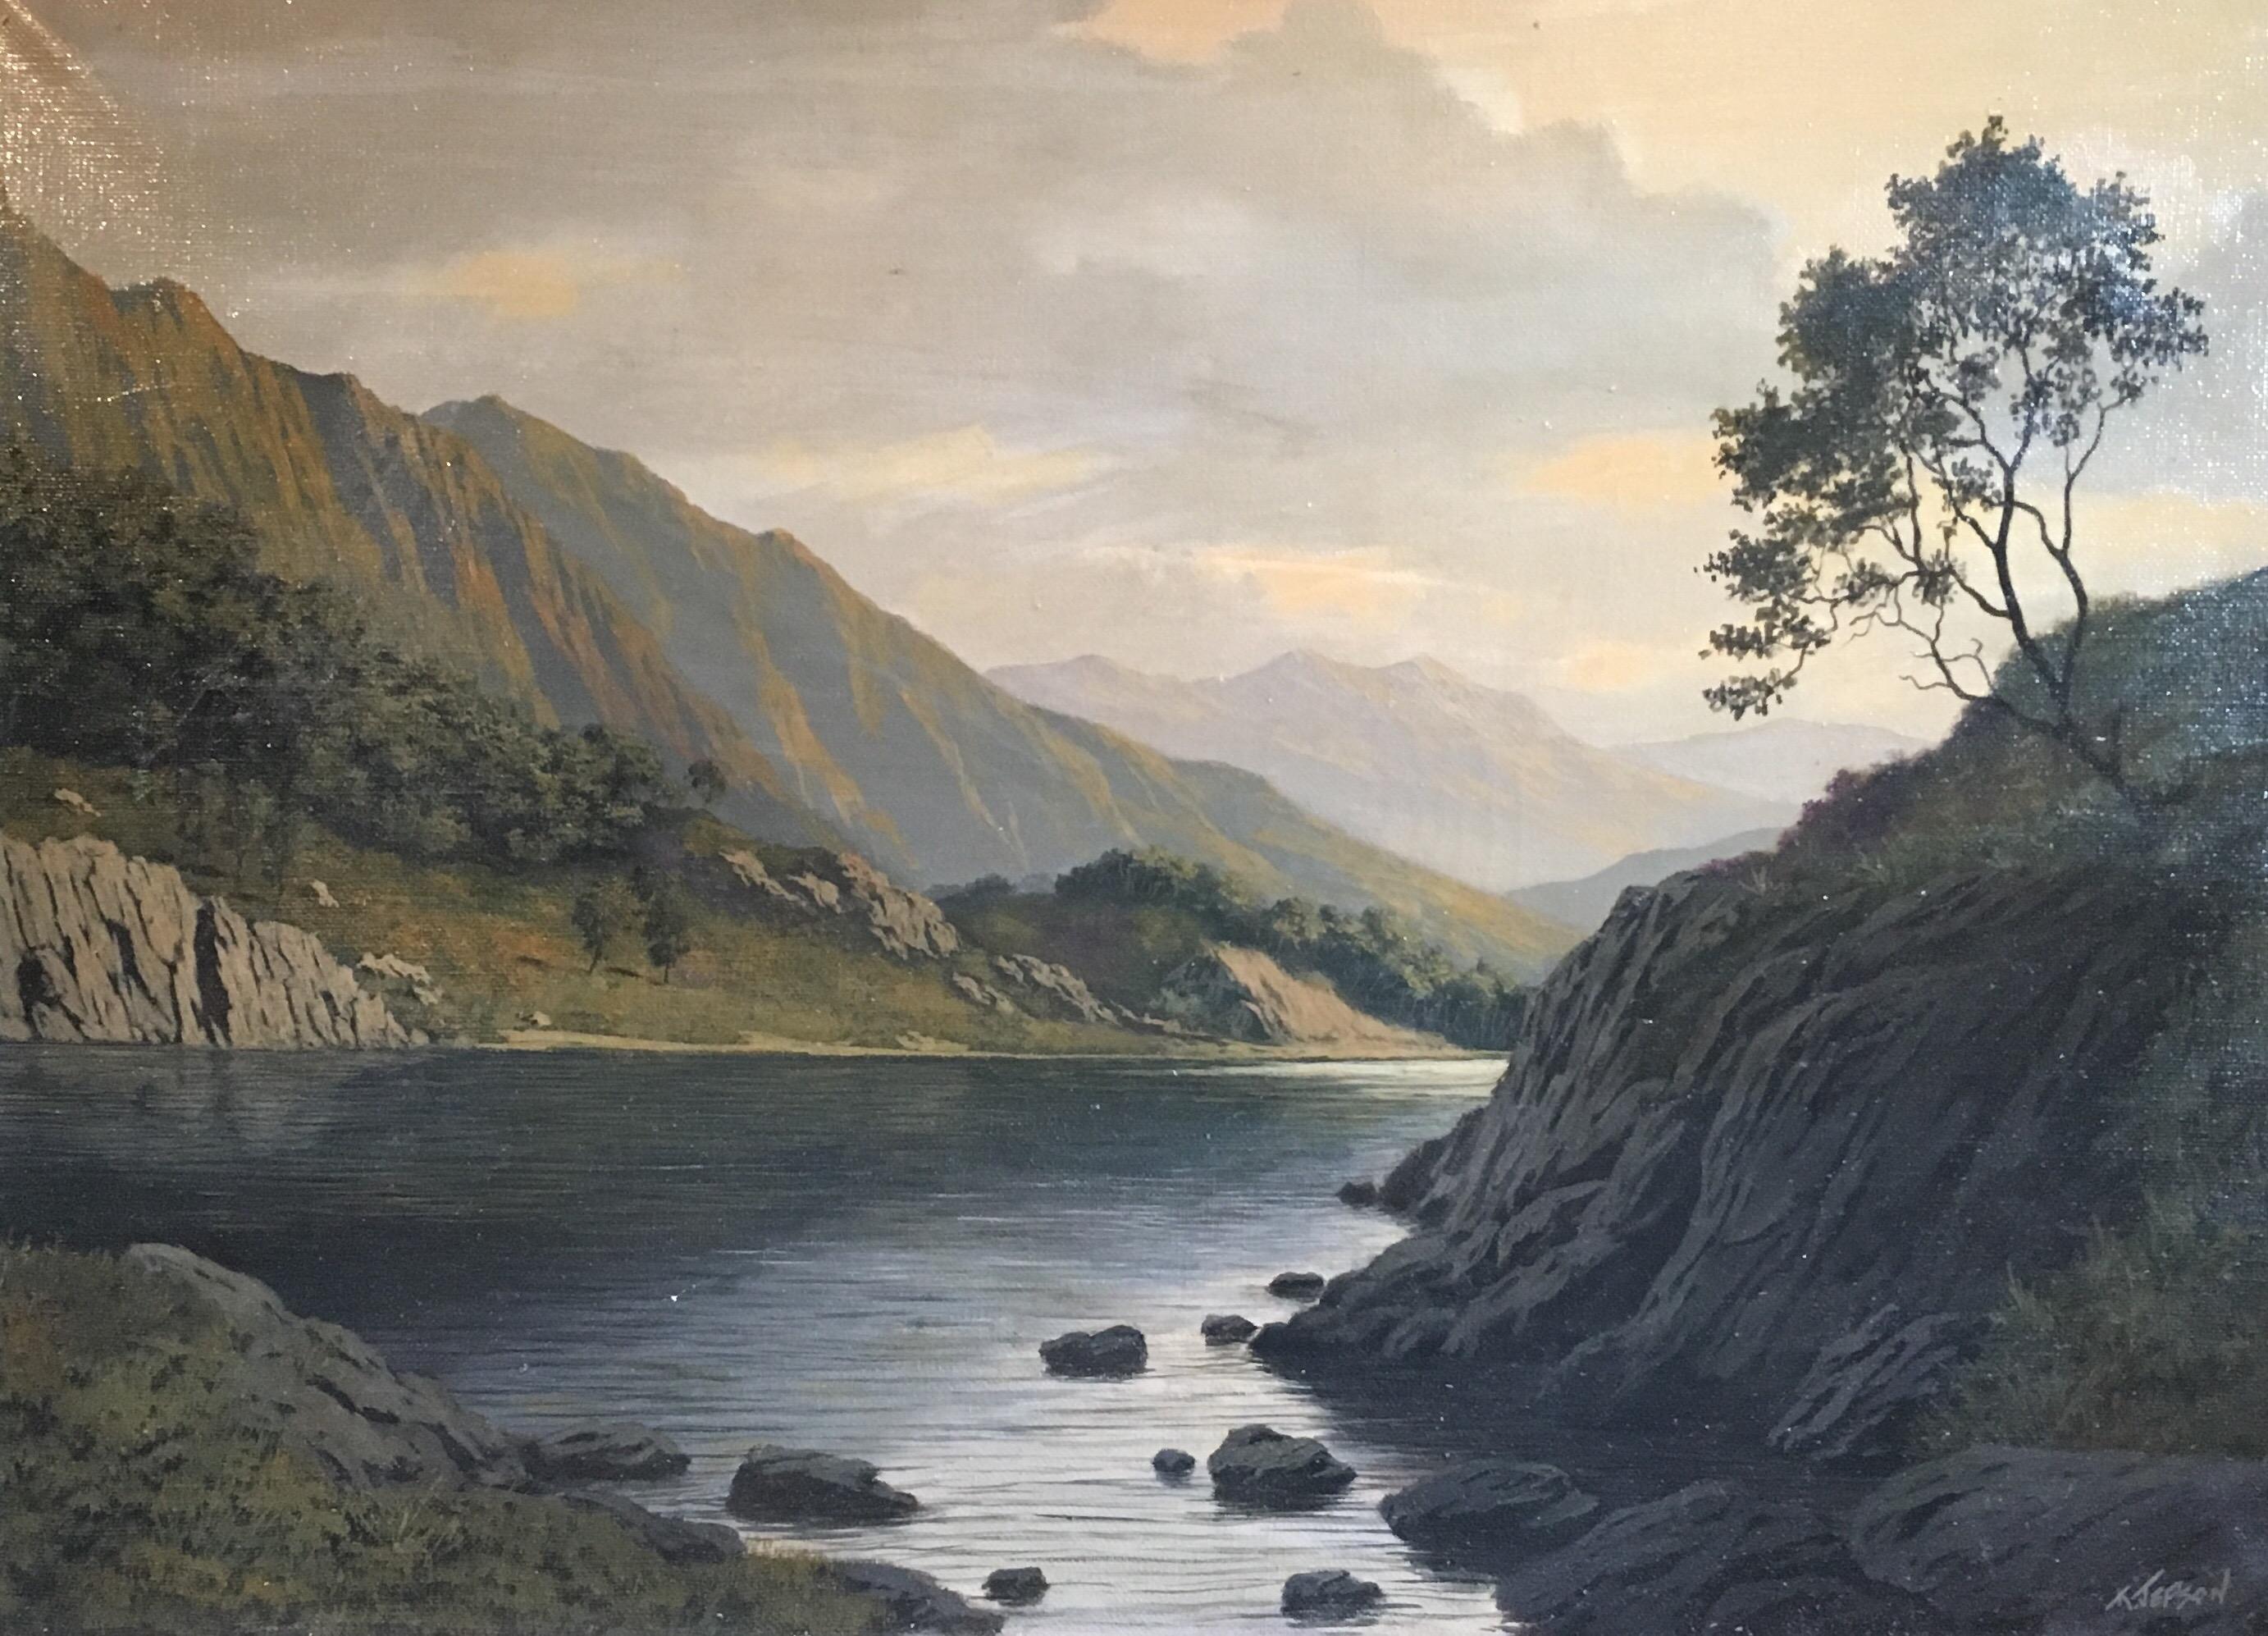 K.Jepson Landscape Painting - Across the Valley, Impressionist Landscape, Signed Original Oil Painting